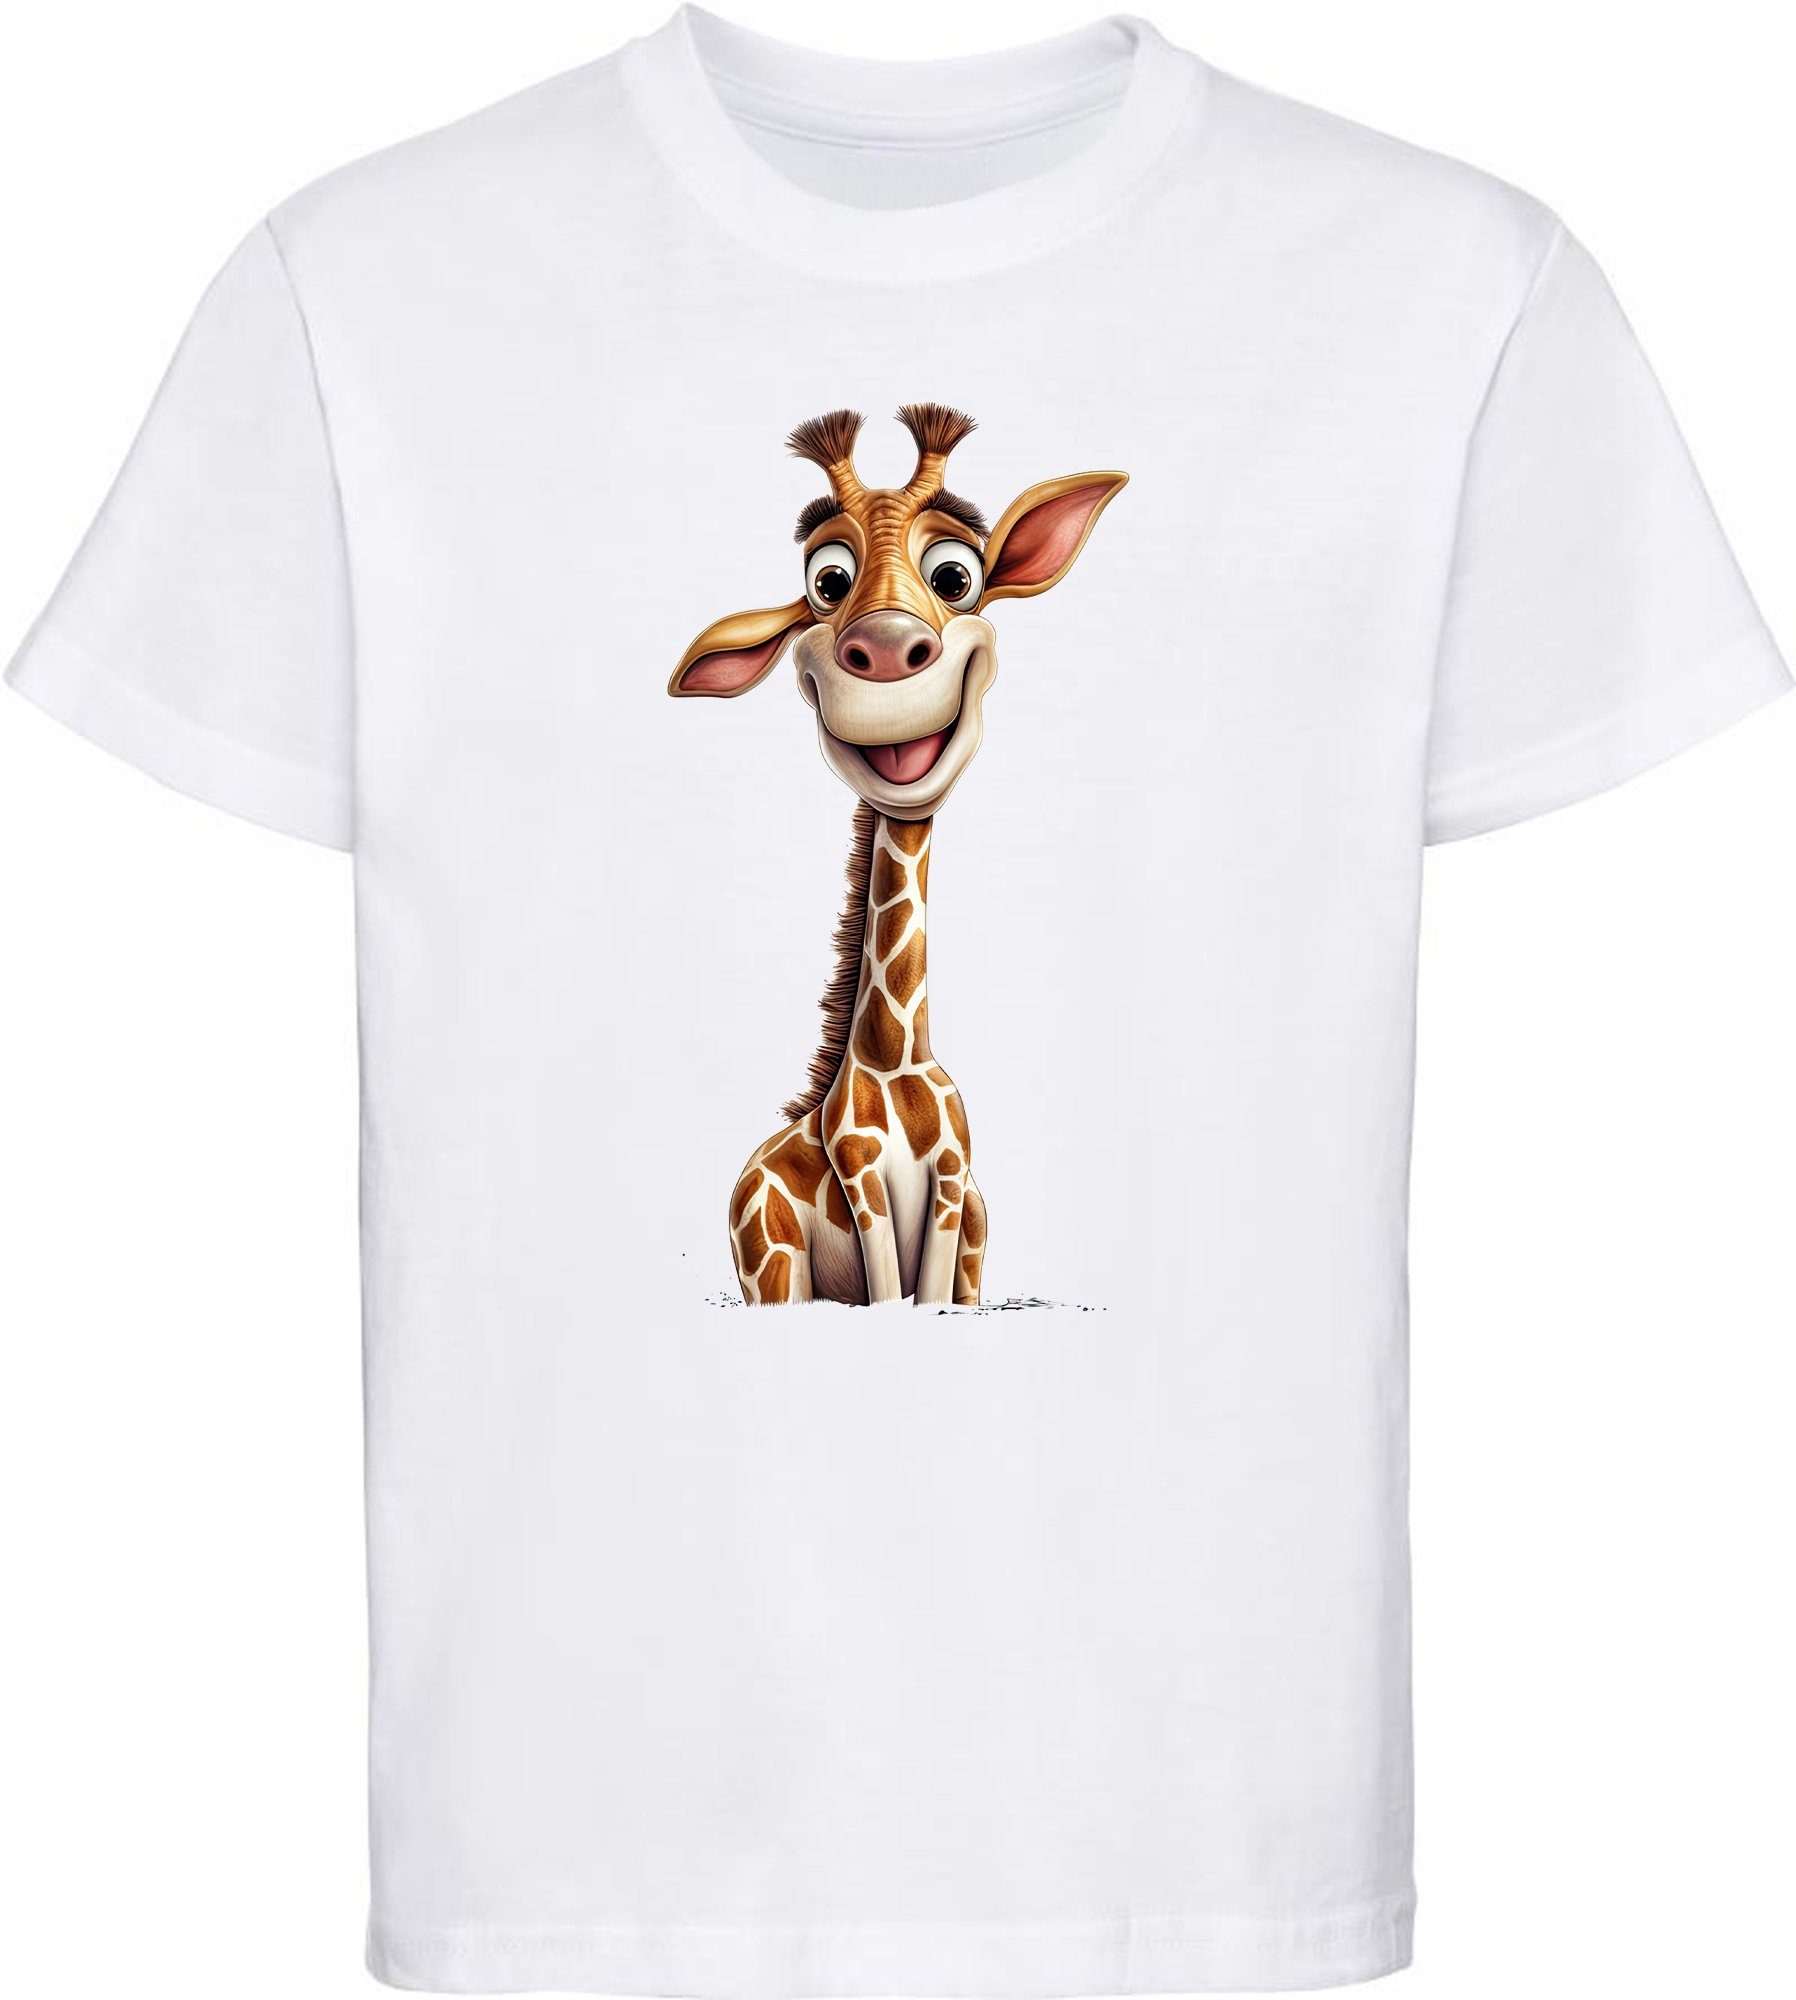 MyDesign24 T-Shirt bedruckt Aufdruck, Giraffe Wildtier Kinder Baumwollshirt - Print Baby mit weiss i273 Shirt